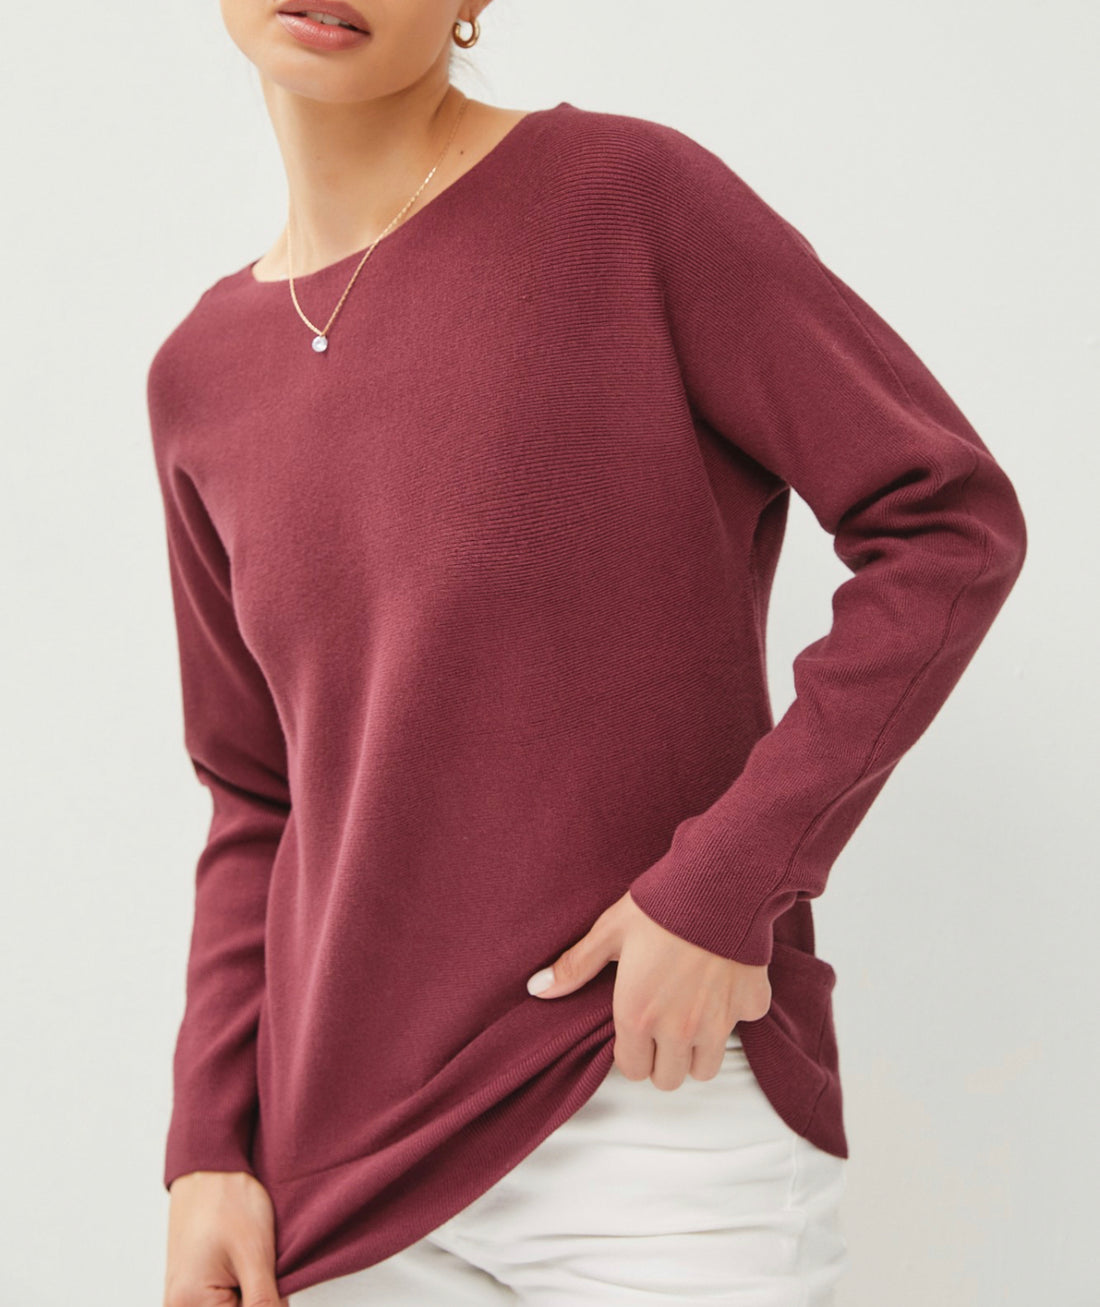 The Sloan Wine Sweater